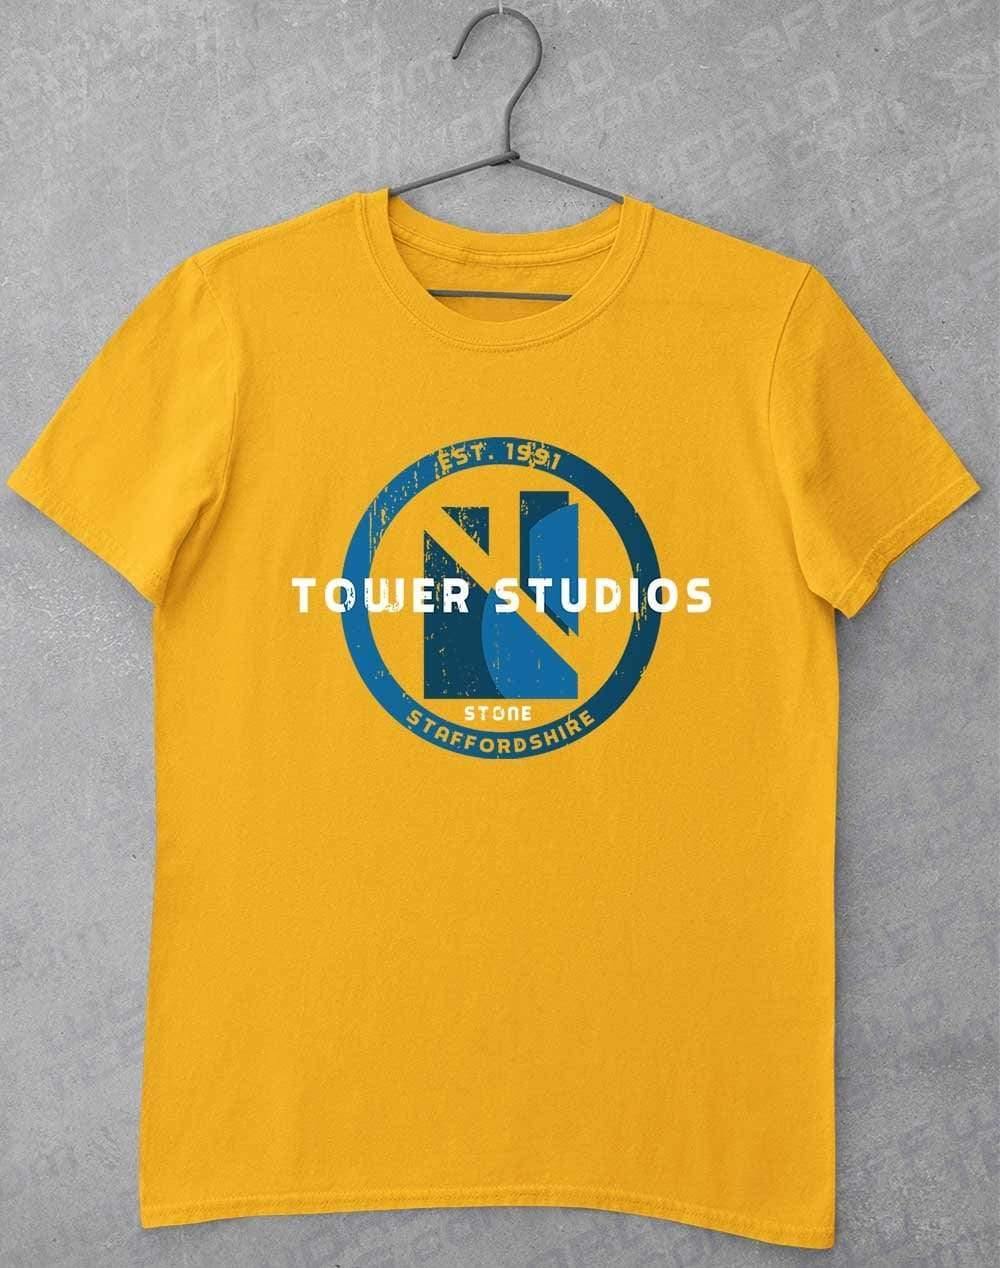 Tower Studios Grunge Circle T-Shirt S / Gold  - Off World Tees